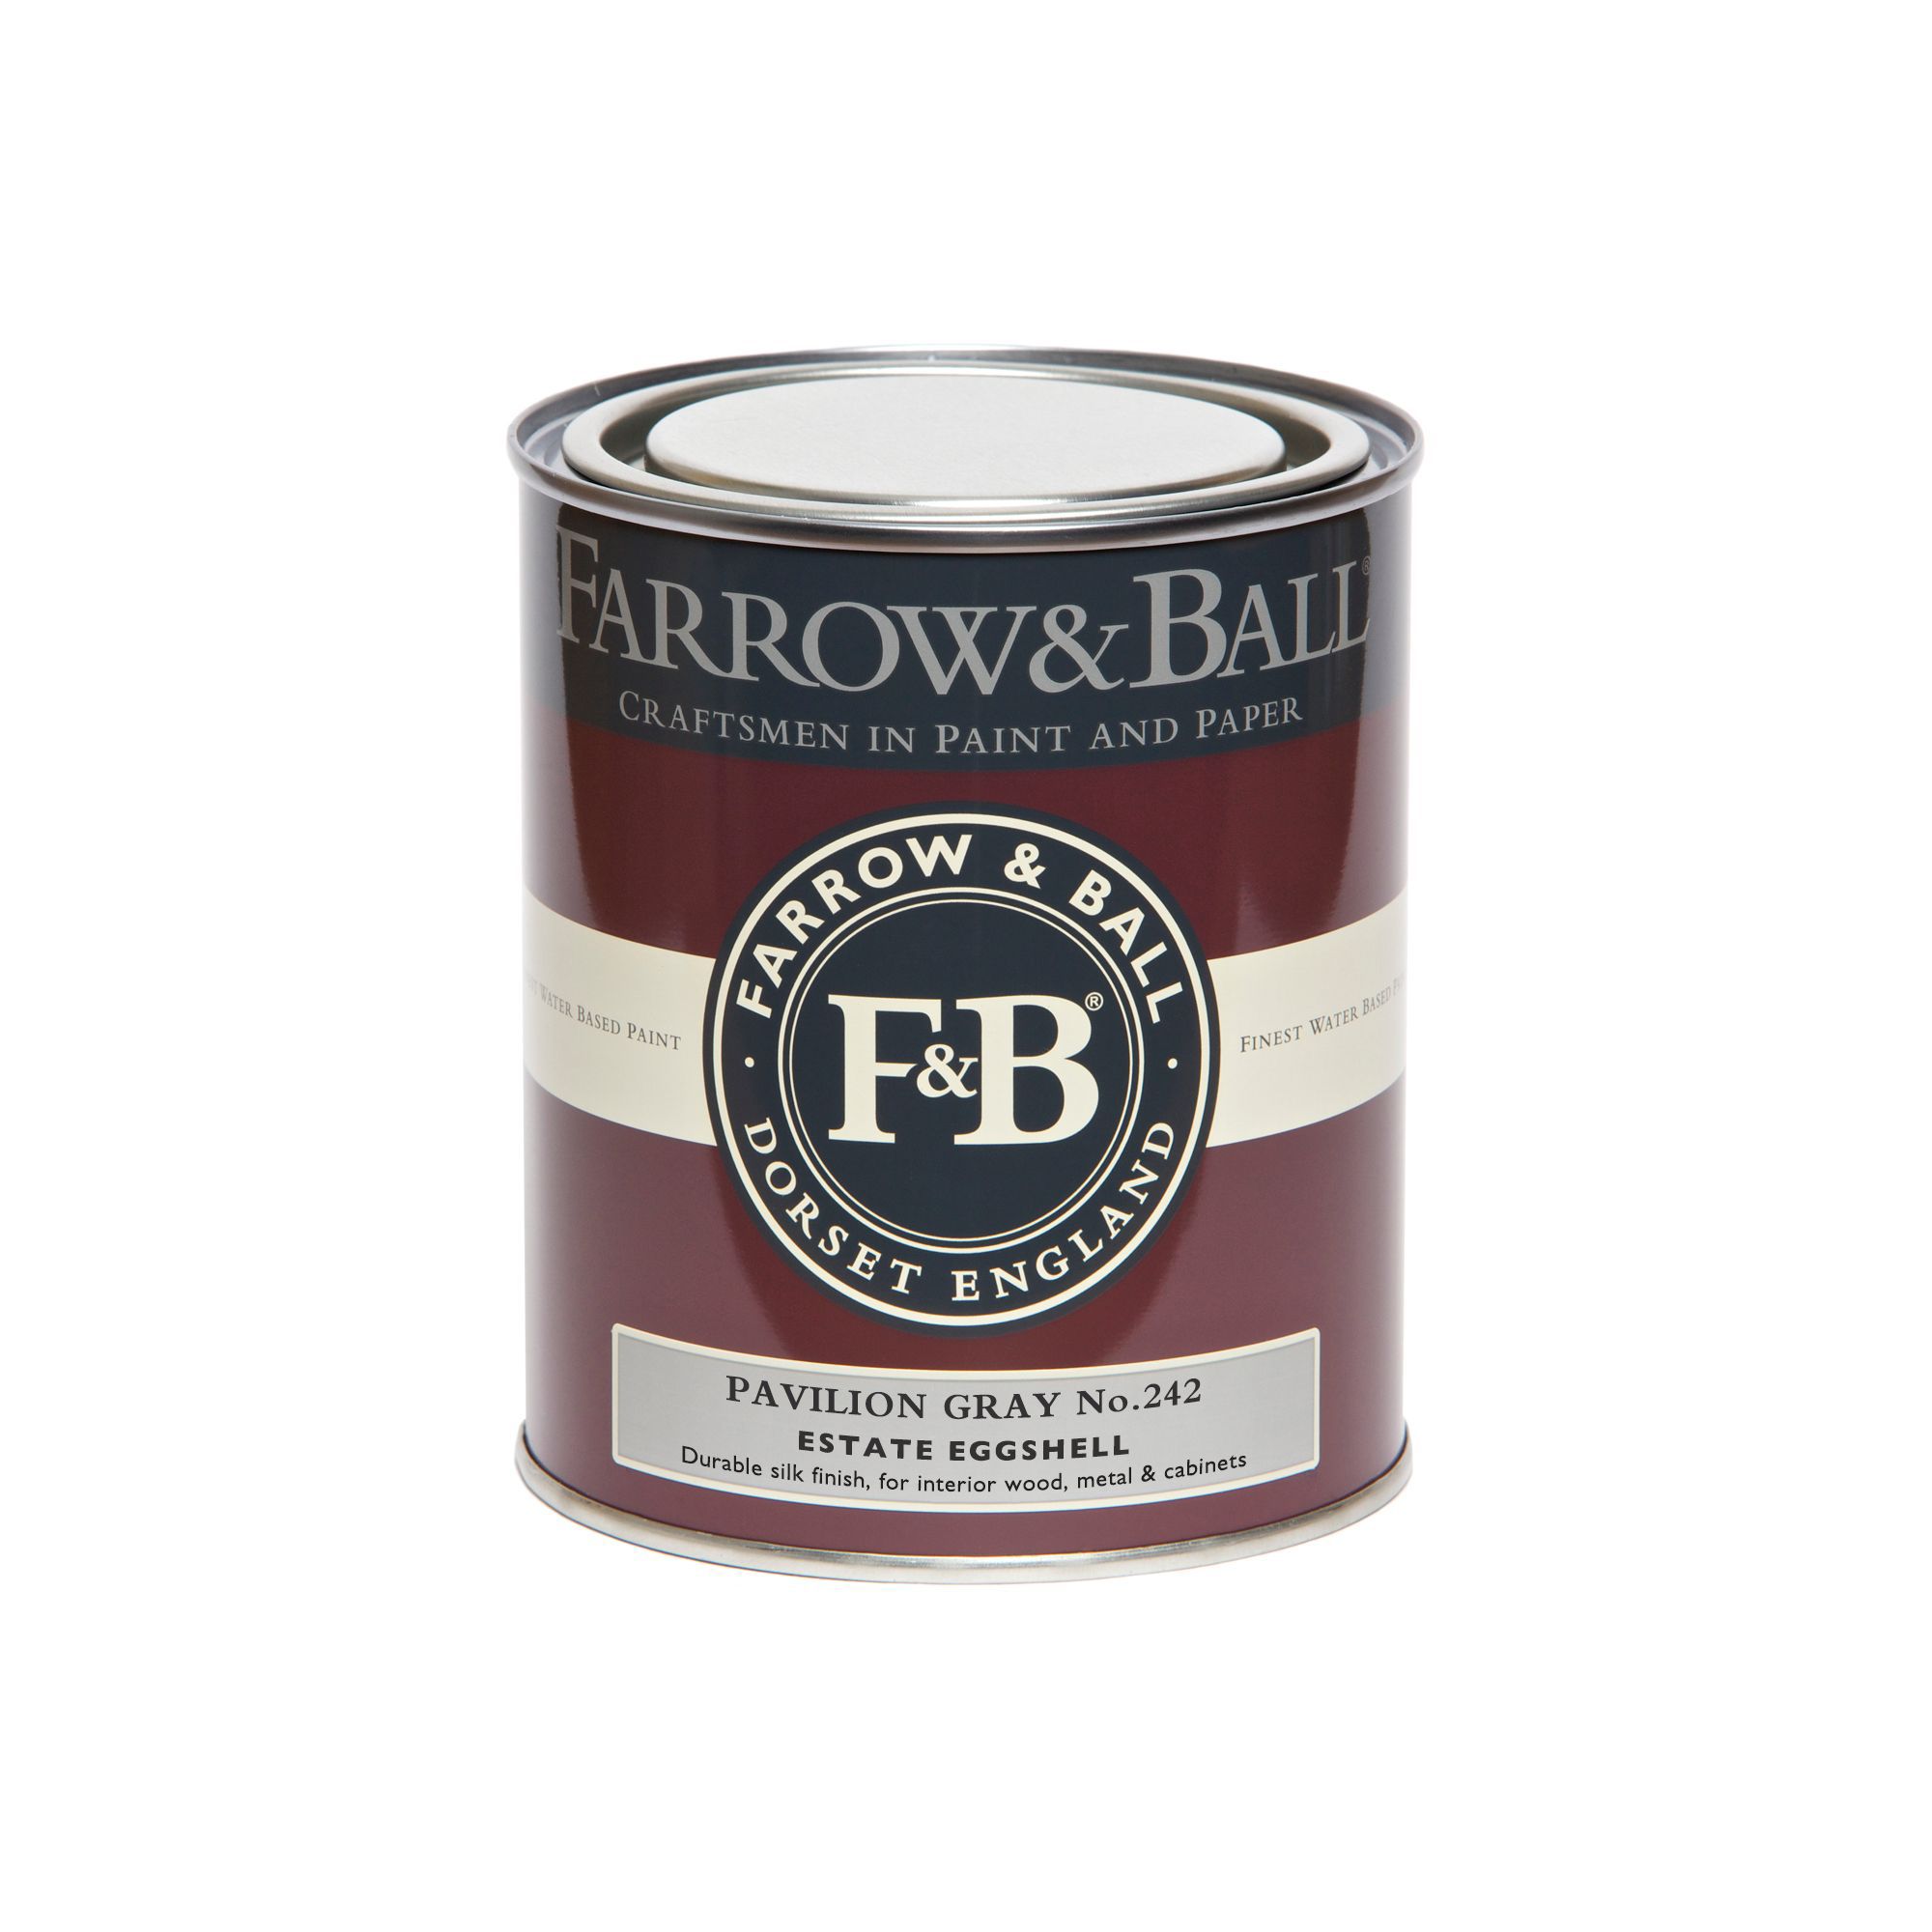 Farrow & Ball Estate Pavilion gray No.242 Eggshell Metal & wood paint, 750ml